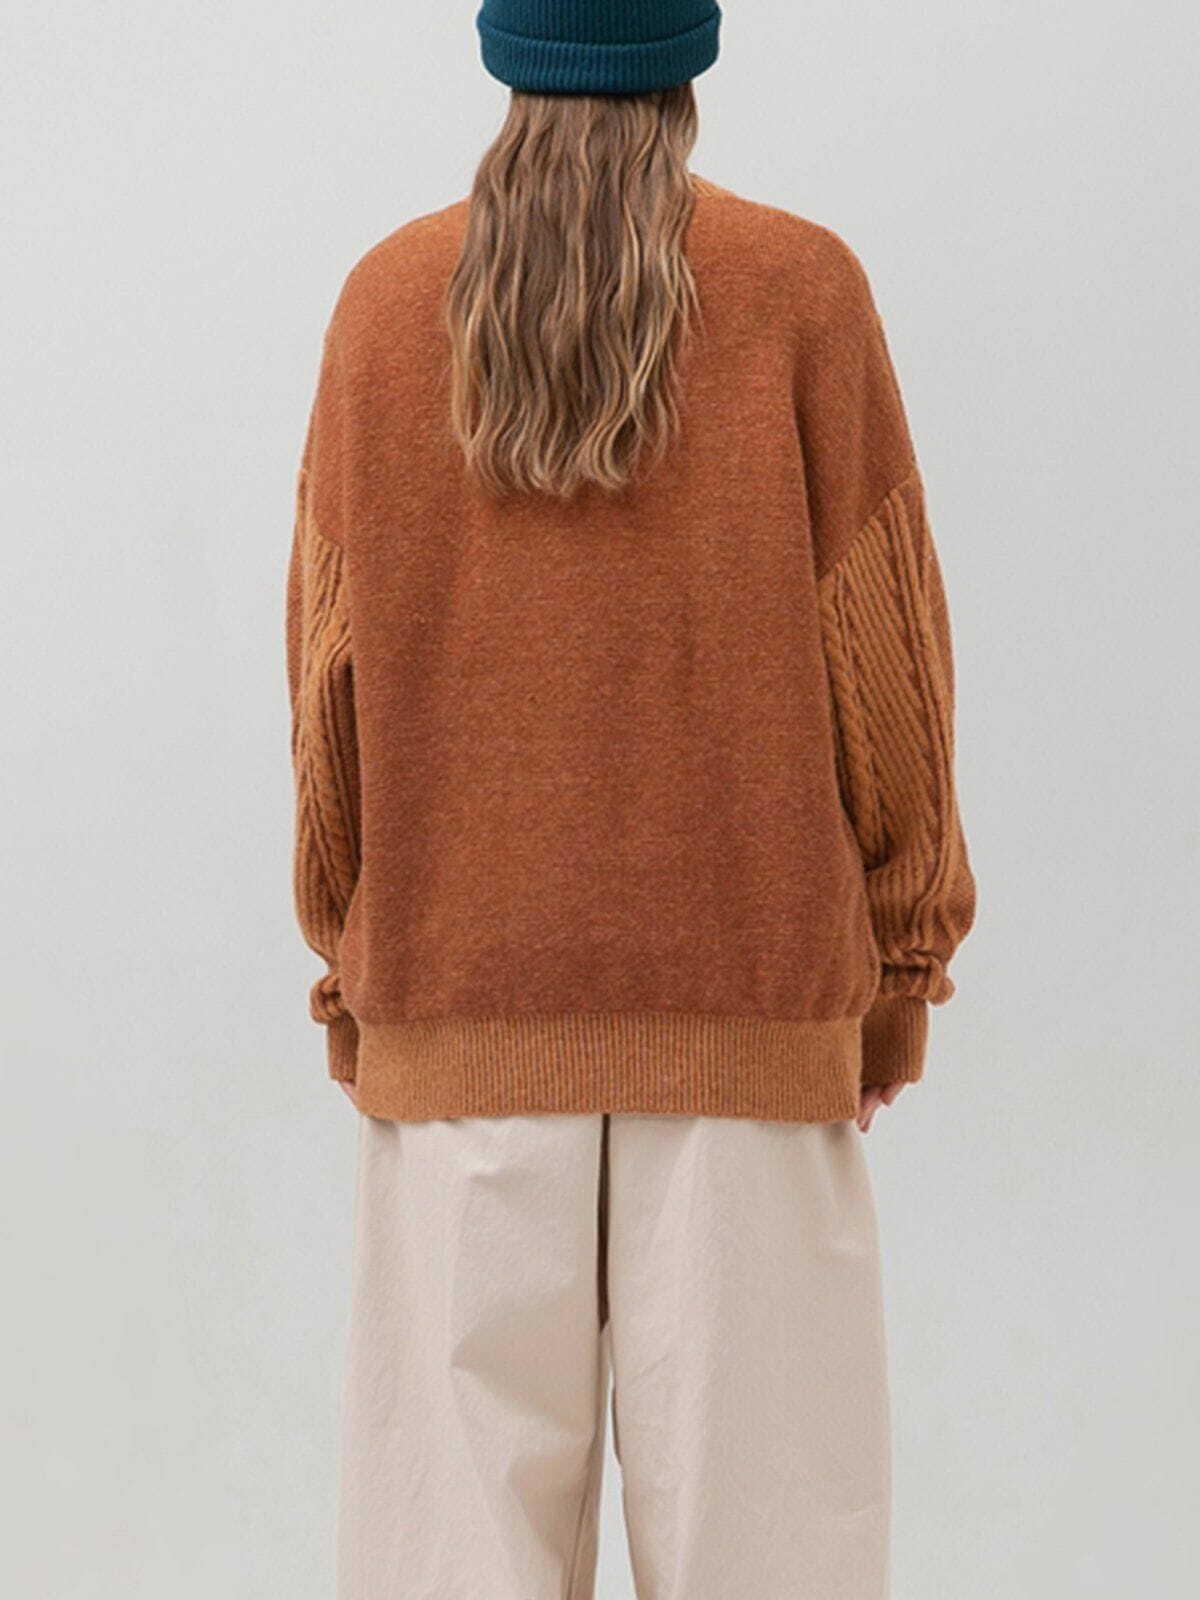 knit rhombus sweater retro & edgy urban fashion 8222